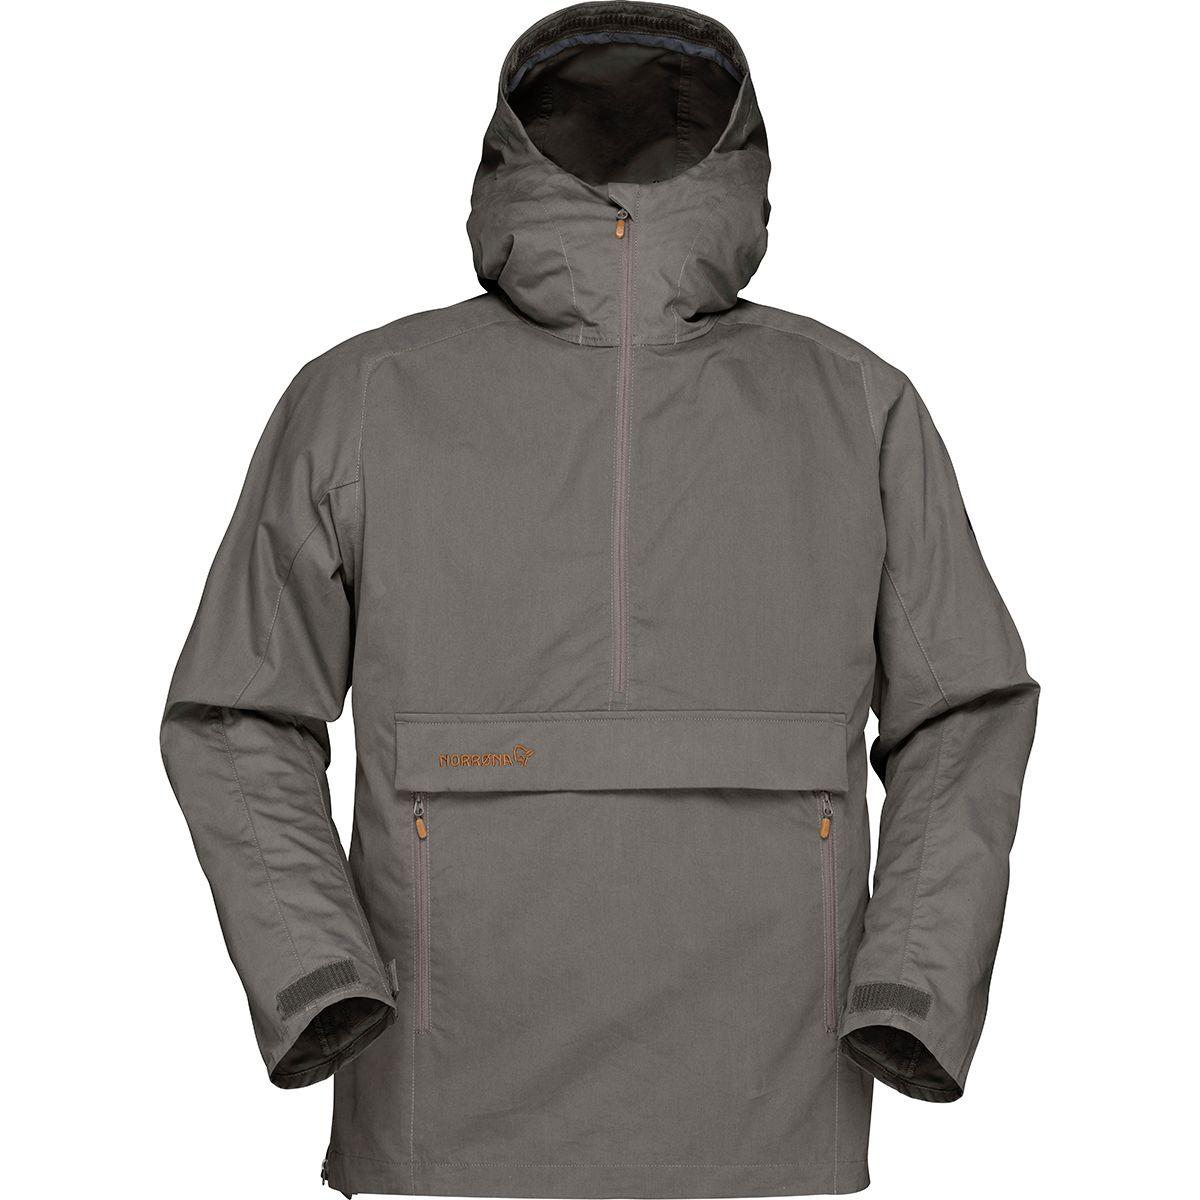 Norrøna Svalbard Cotton Anorak Jacket in Slate Grey (Gray) for Men - Lyst